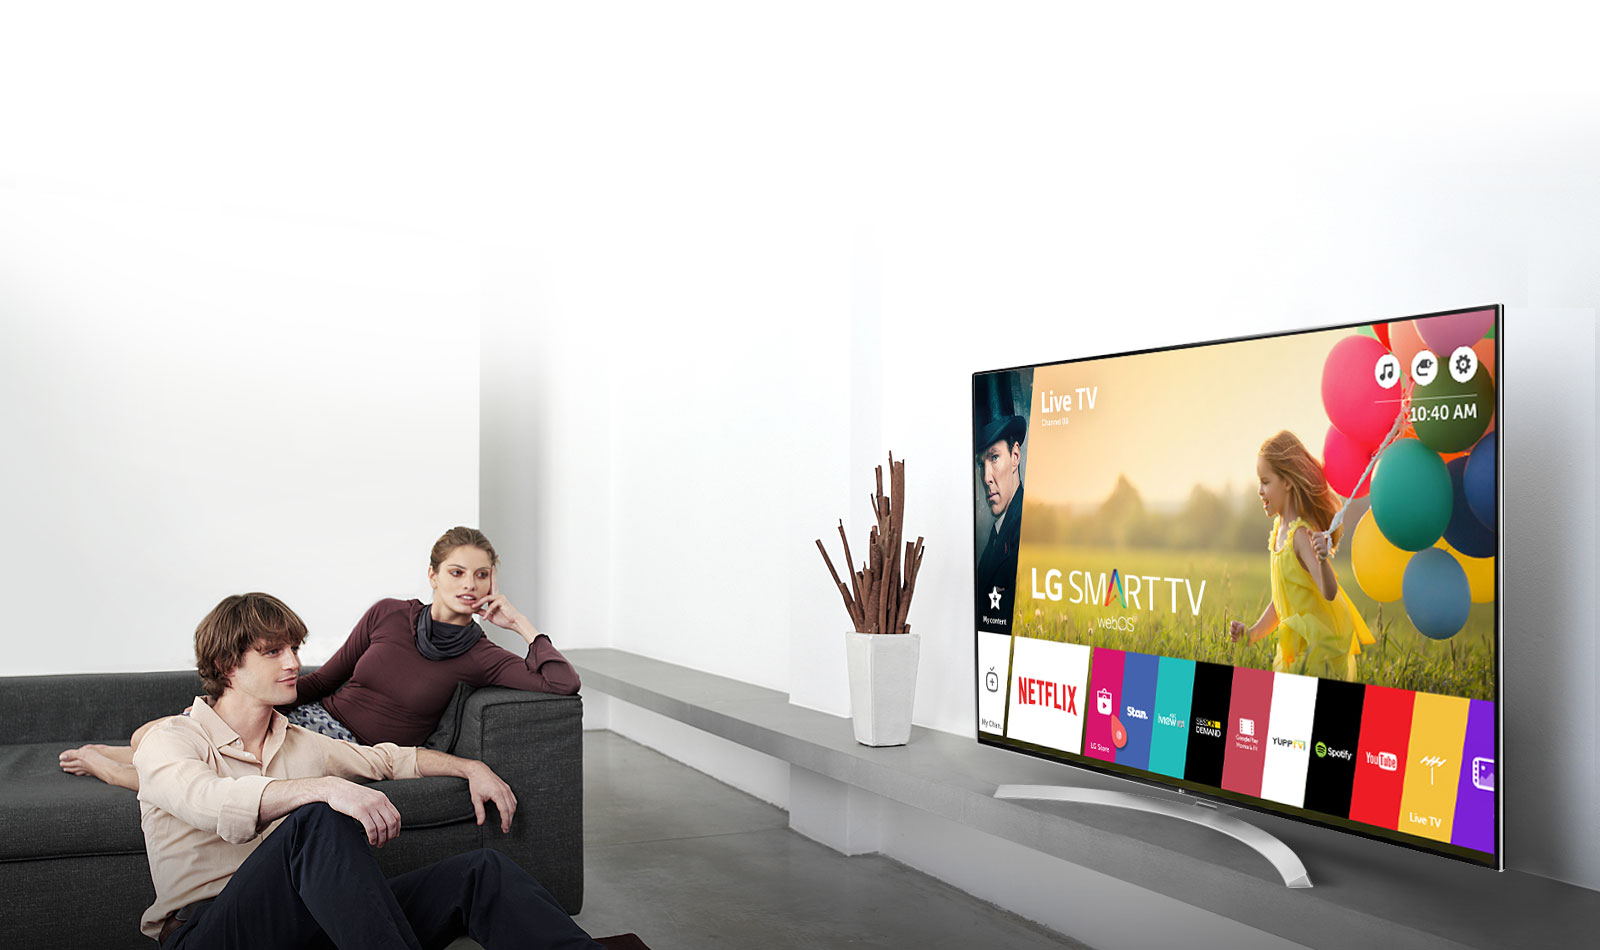 Телевизор зал смарт. Телевизор LG Smart TV. Телевизор LG Smart TV 2017. Телевизор LG Smart TV banner. Реклама на телевизорах LG Smart TV.